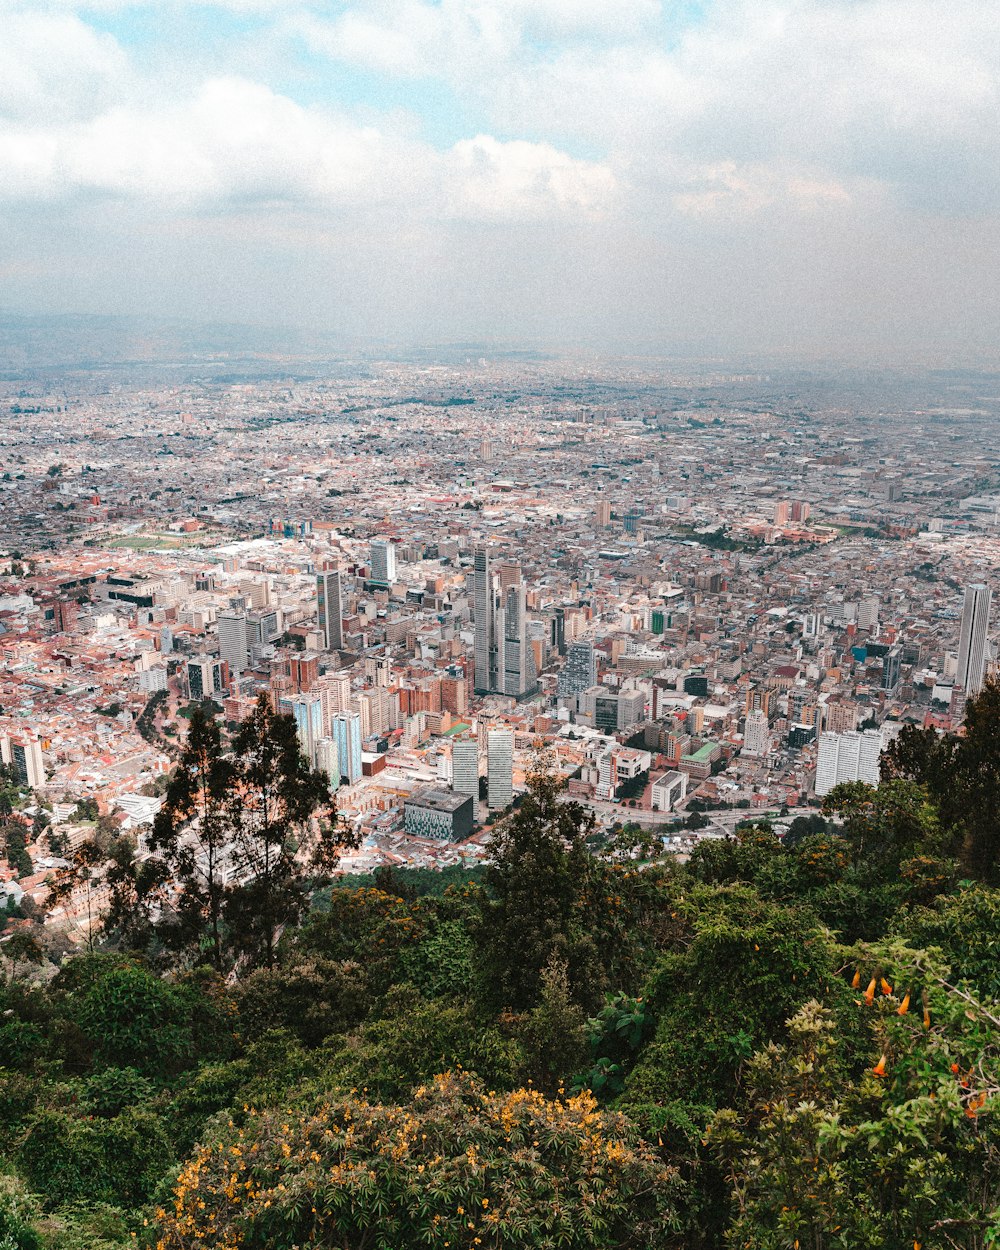 Una vista di una città dalla cima di una collina